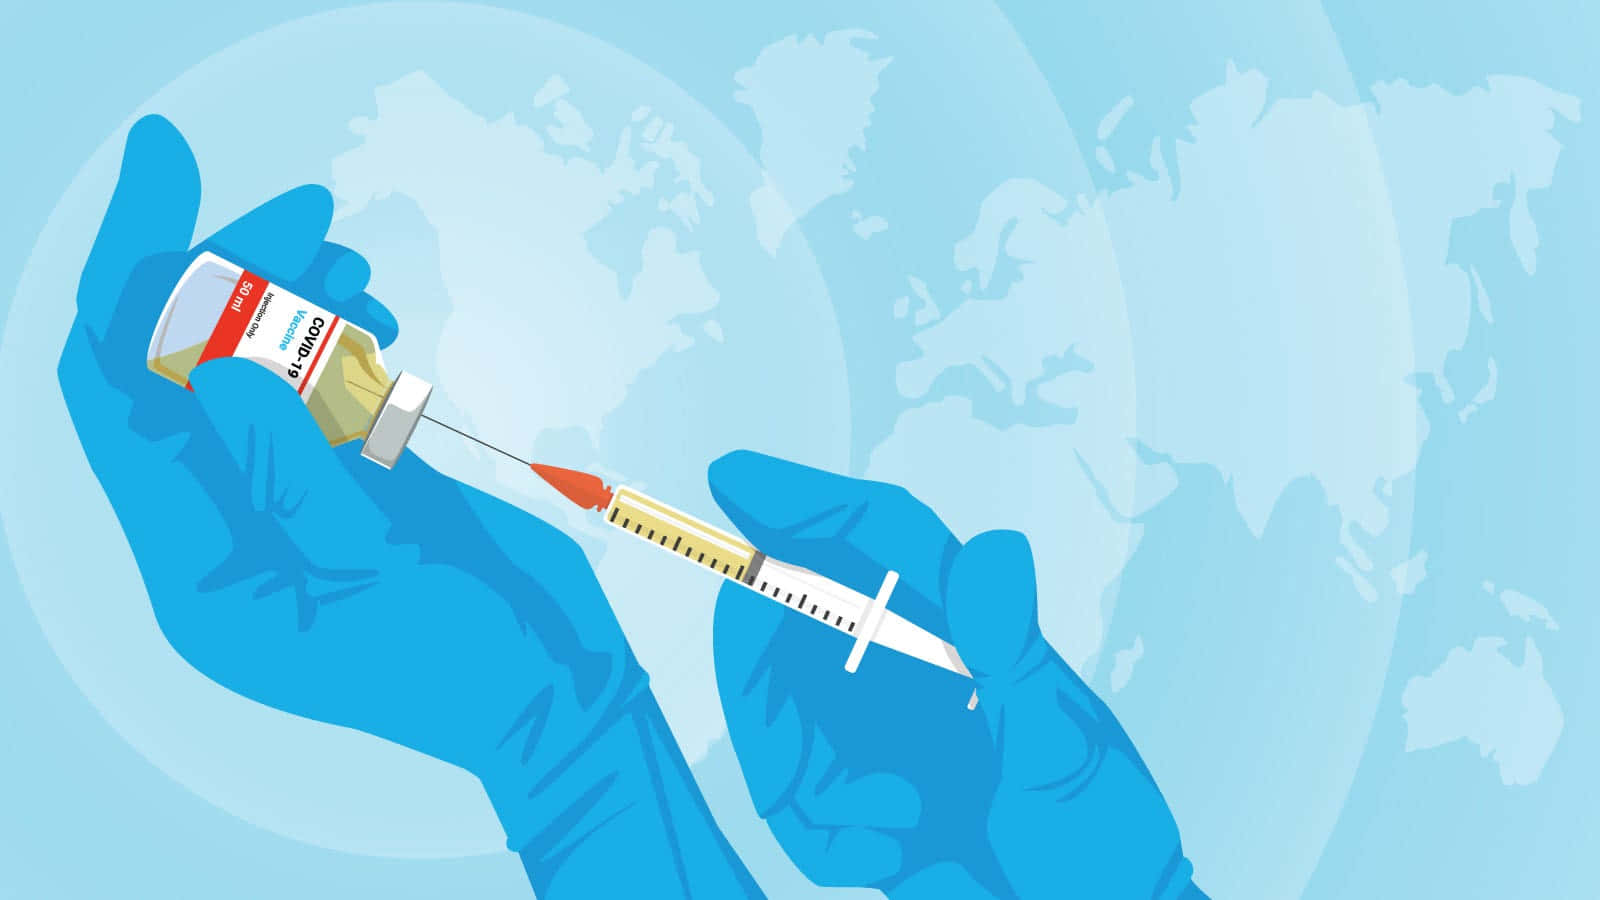 Covid-19 Vaccine Loading Syringe Digital Art Wallpaper